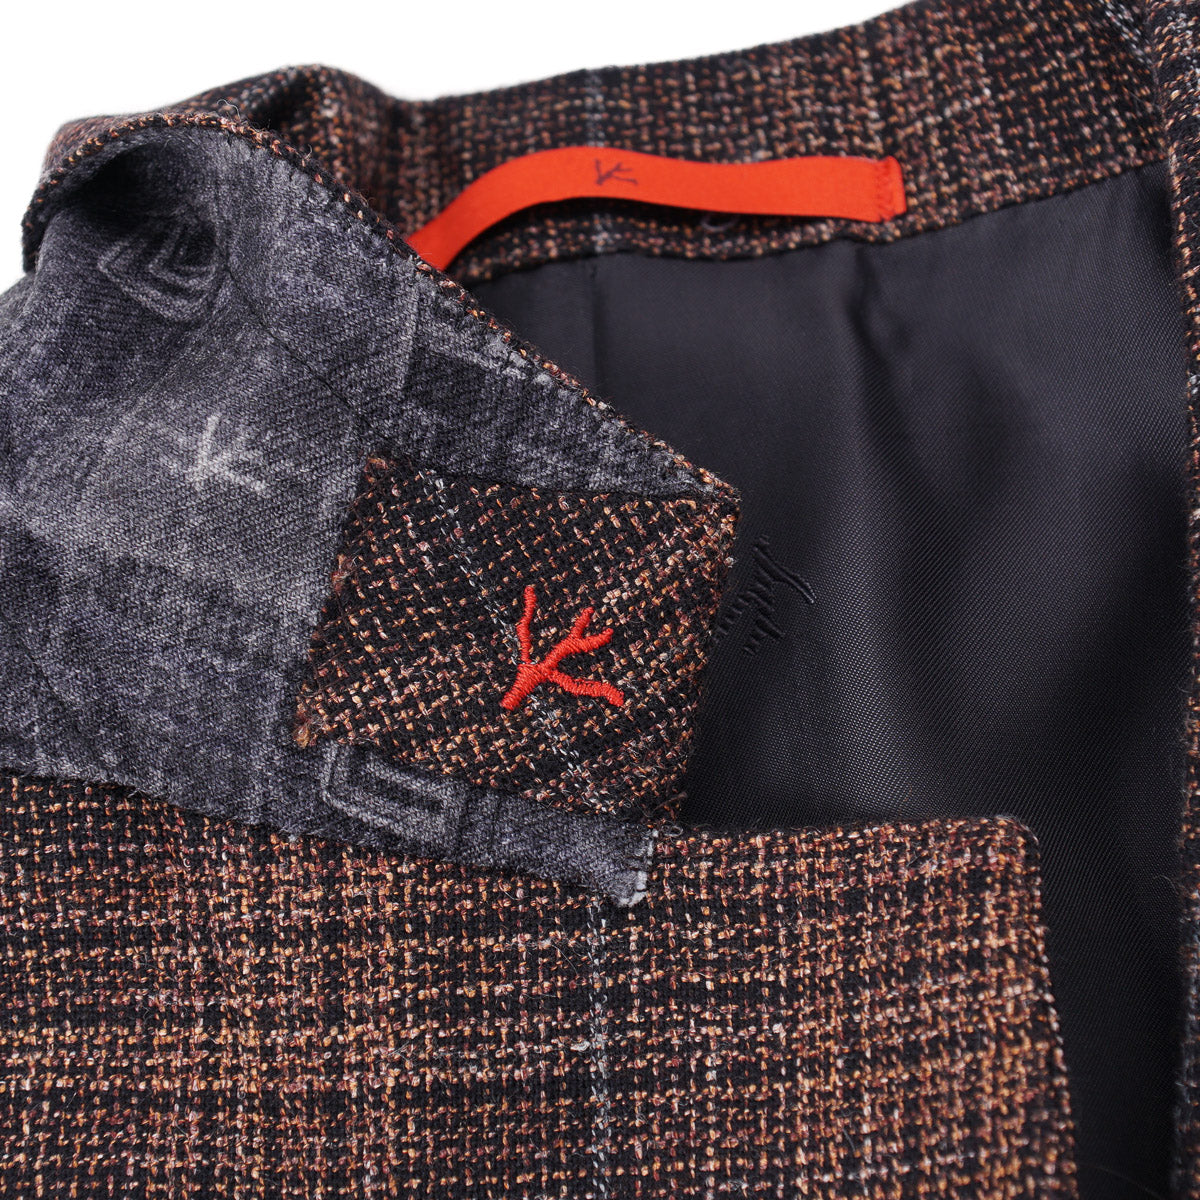 Isaia Woven Check Wool-Silk-Linen Suit - Top Shelf Apparel